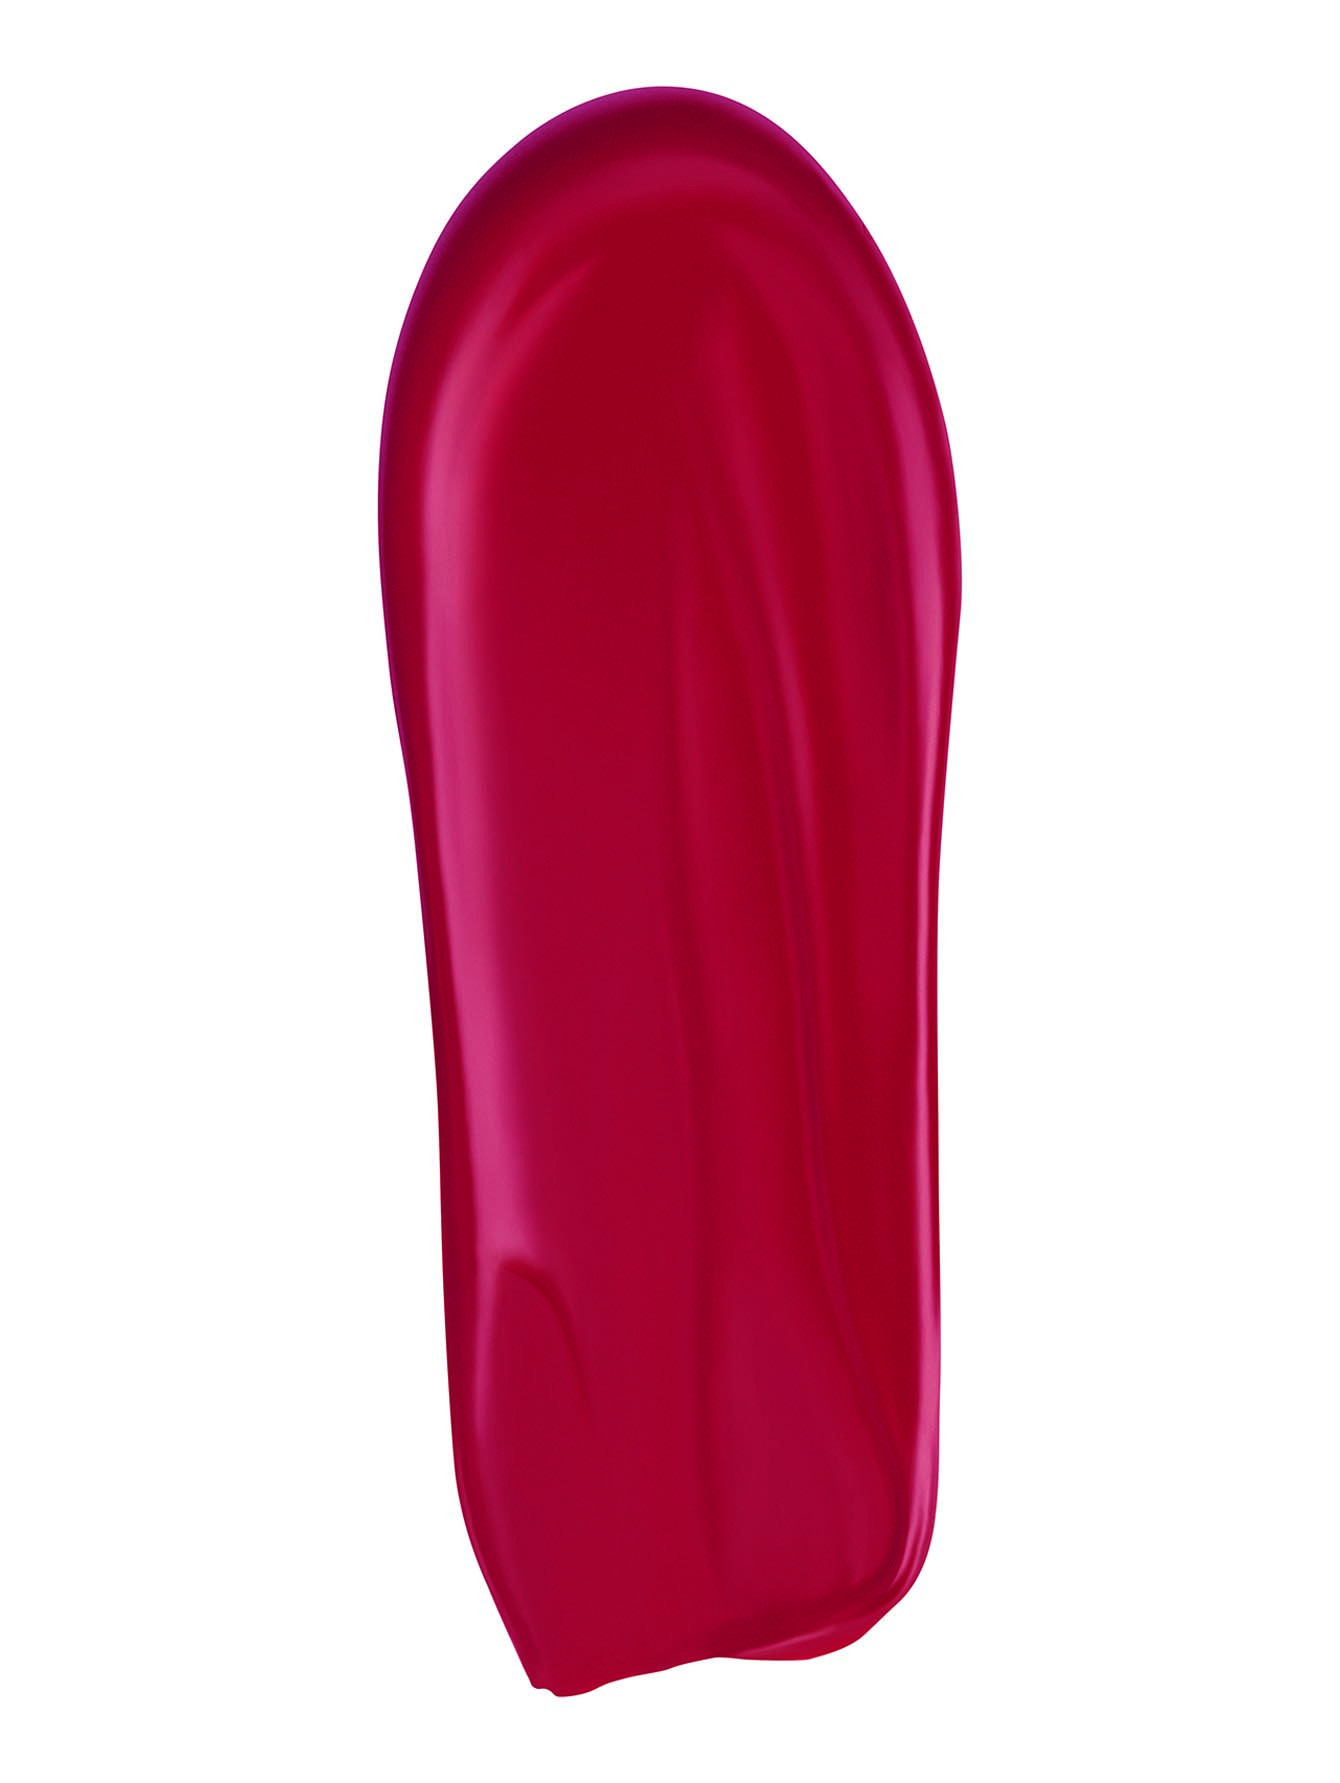 Матовая губная помада Lip-Expert Matte Liquid Lipstick, 10 My Red, 4 мл - Обтравка1